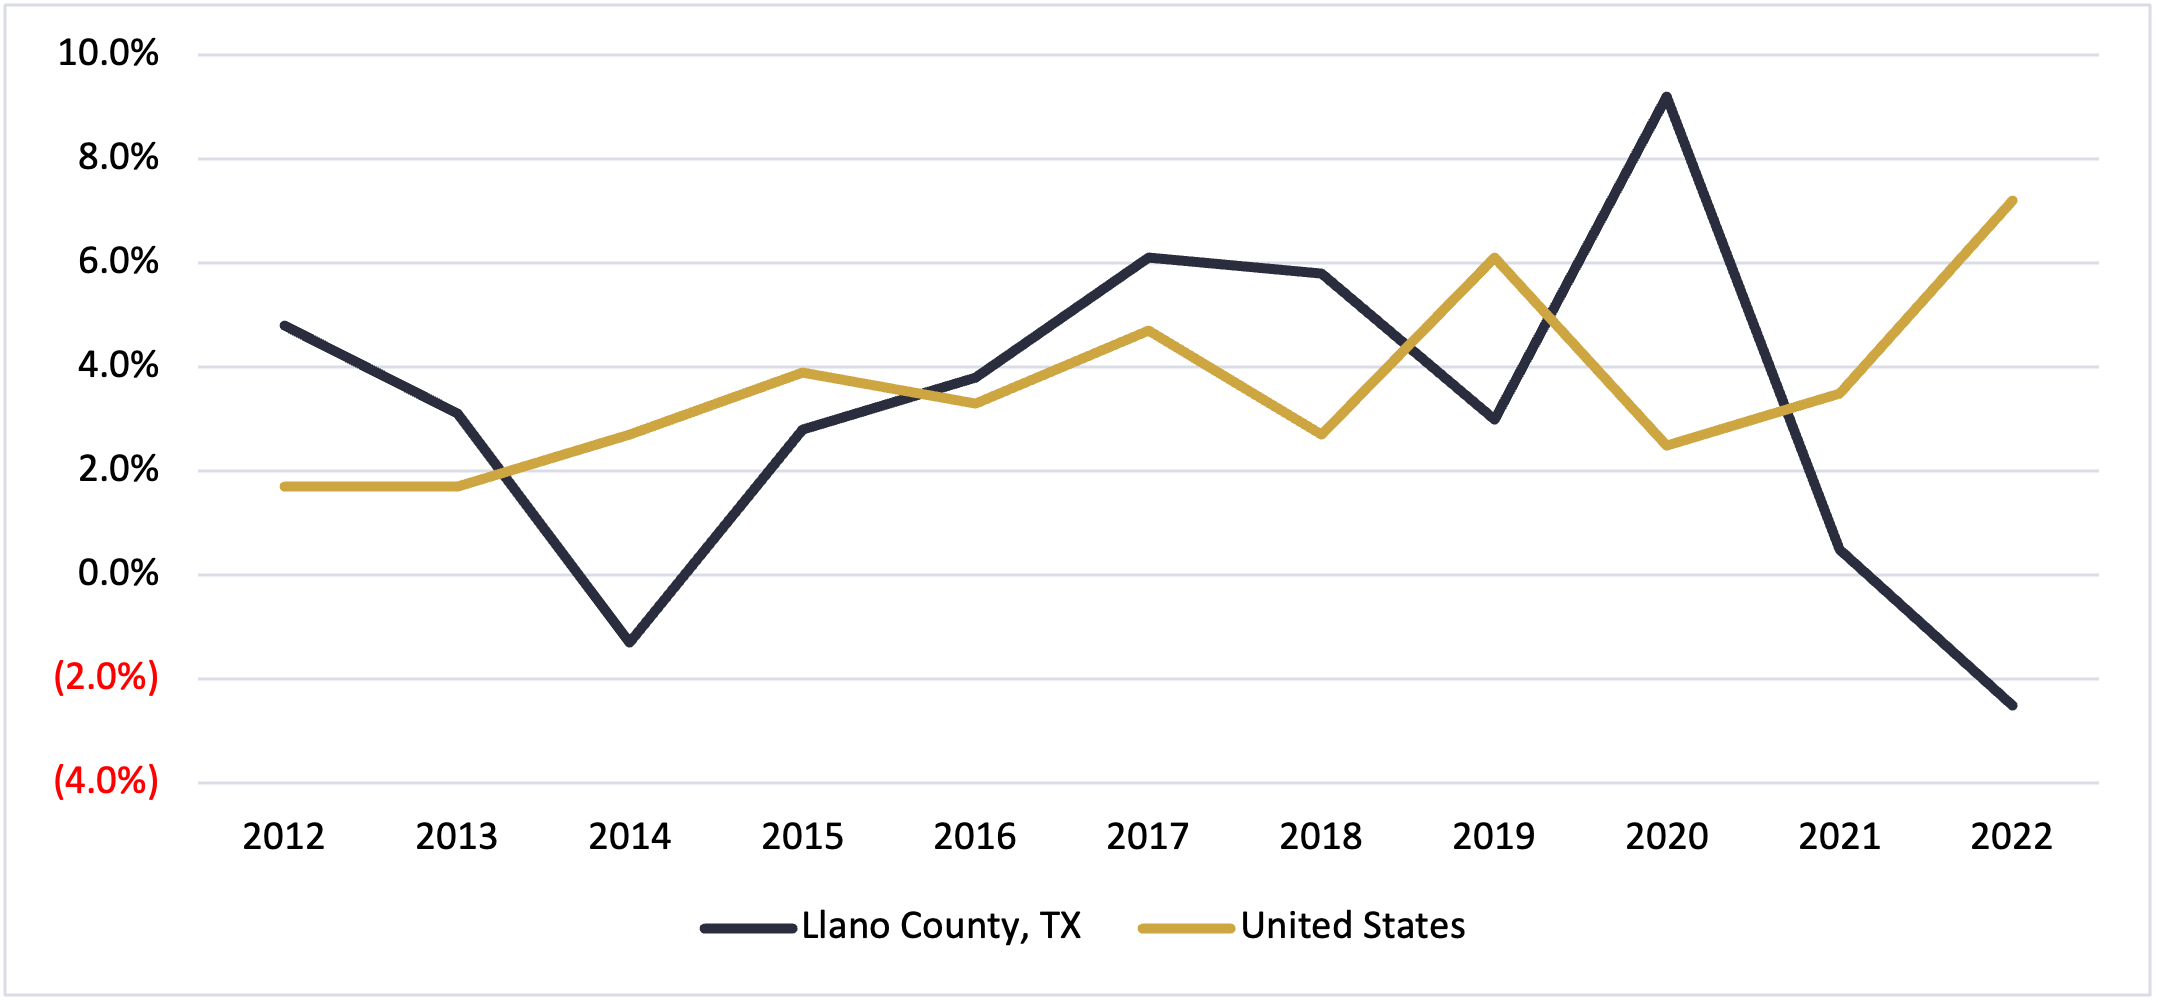 Llano County Texas Median Household Income 2022